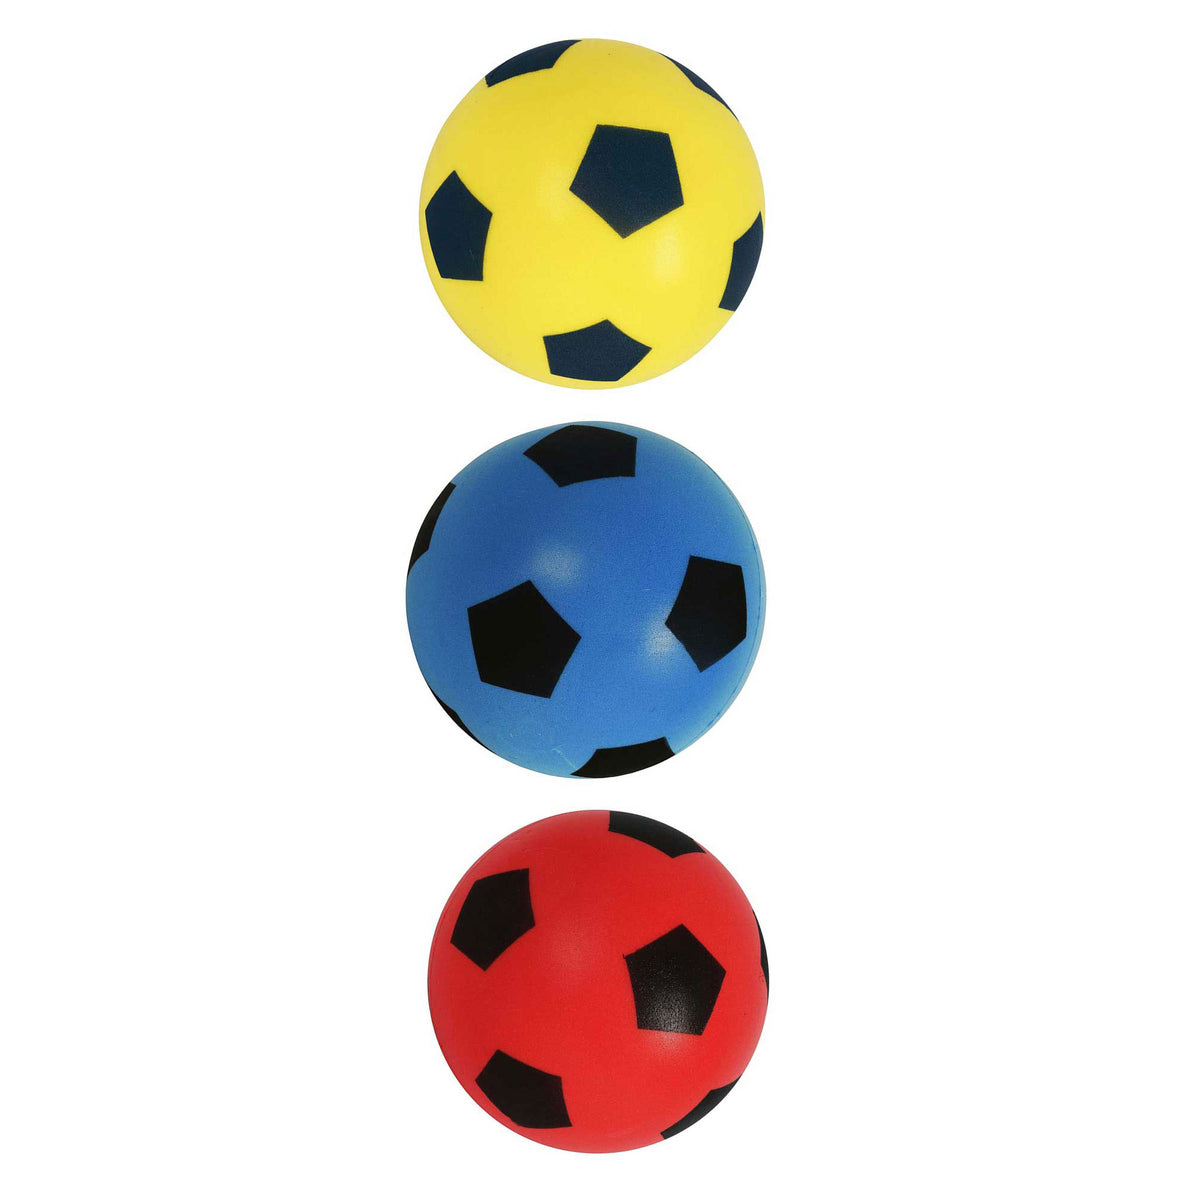 Copy of Soft Foam/Sponge Footballs/Soccer Balls - Red